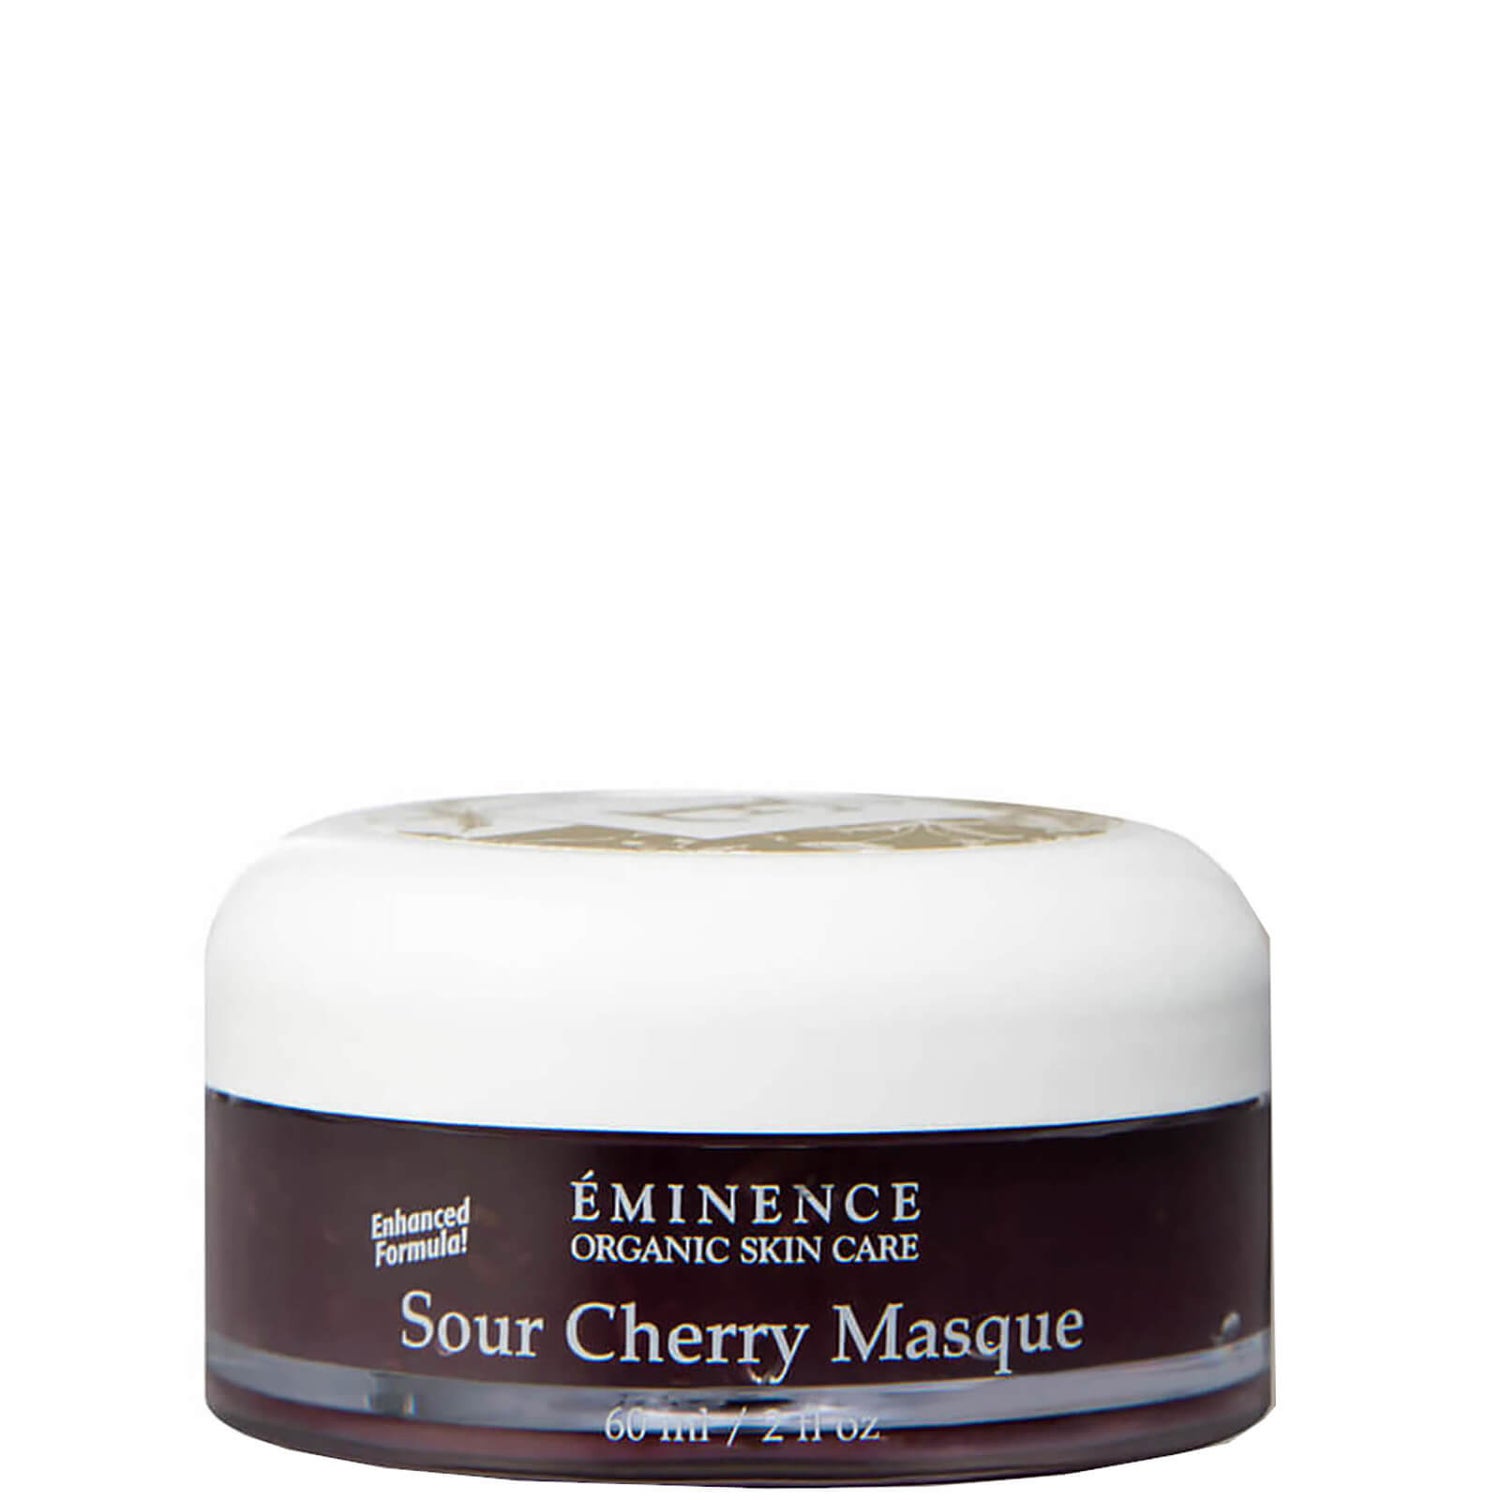 Eminence Organic Skin Care Sour Cherry Masque 2 fl. oz